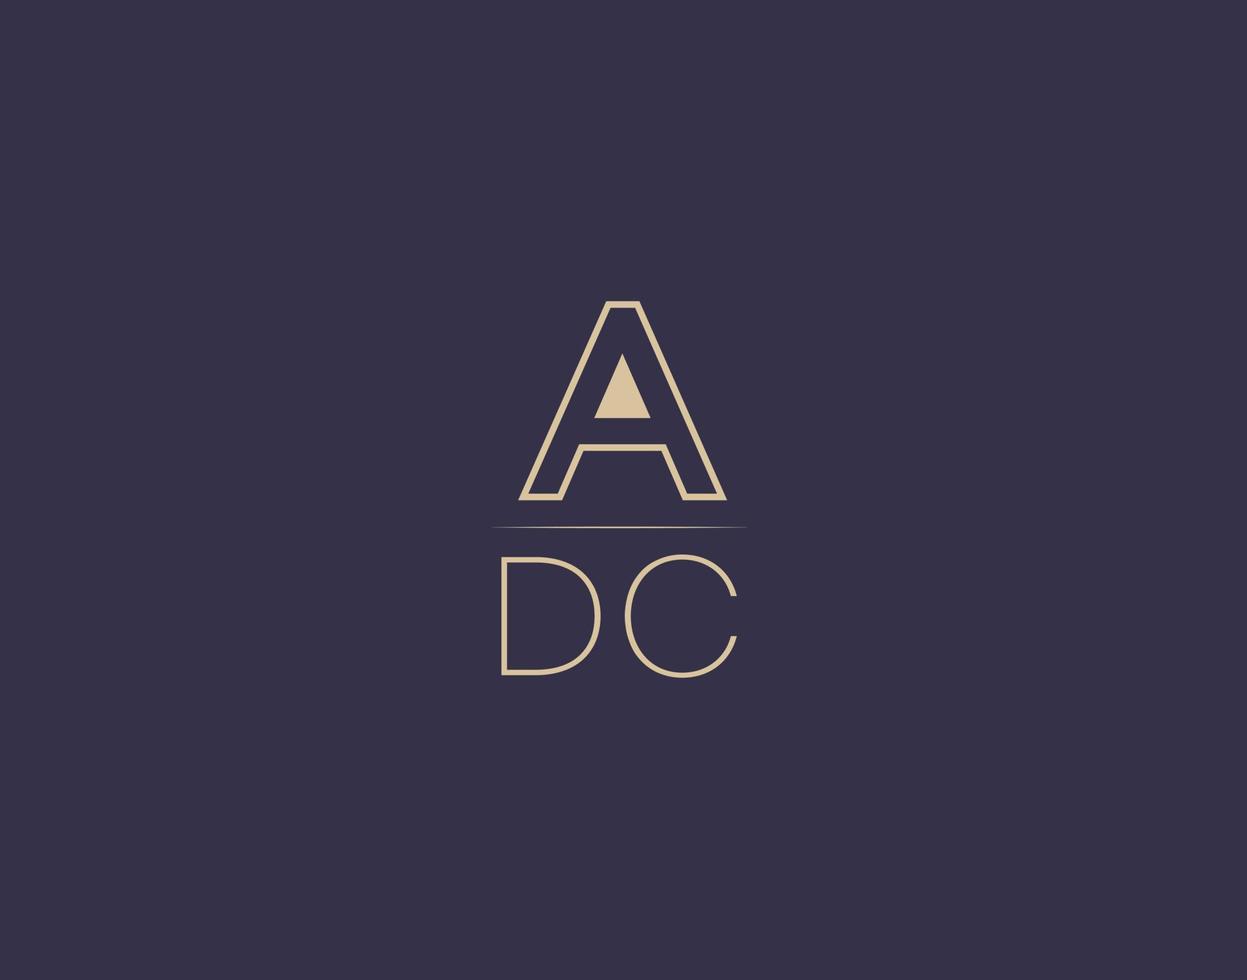 ADC letter logo design modern minimalist vector images